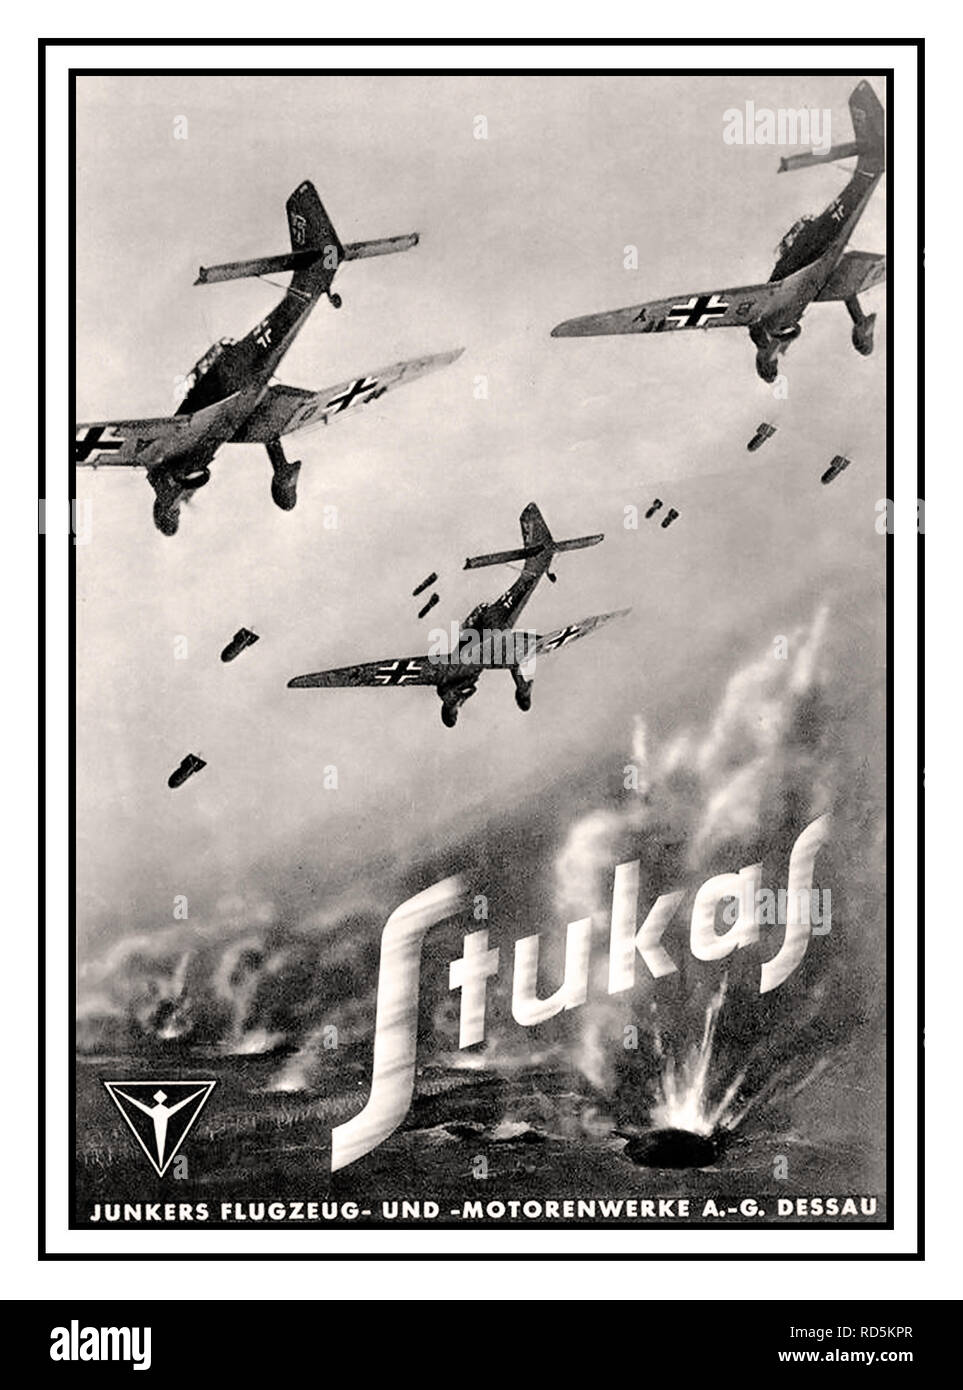 STUKA JU -87 Vintage WW2 poster di propaganda nazista per Fighter bombardieri Junkers Ju-87 'STUKAS' Dive- bombardieri da "Junkers Flugzeug und Motorund Enwerke AG Dessau' Germania produttori poster promozionali Foto Stock